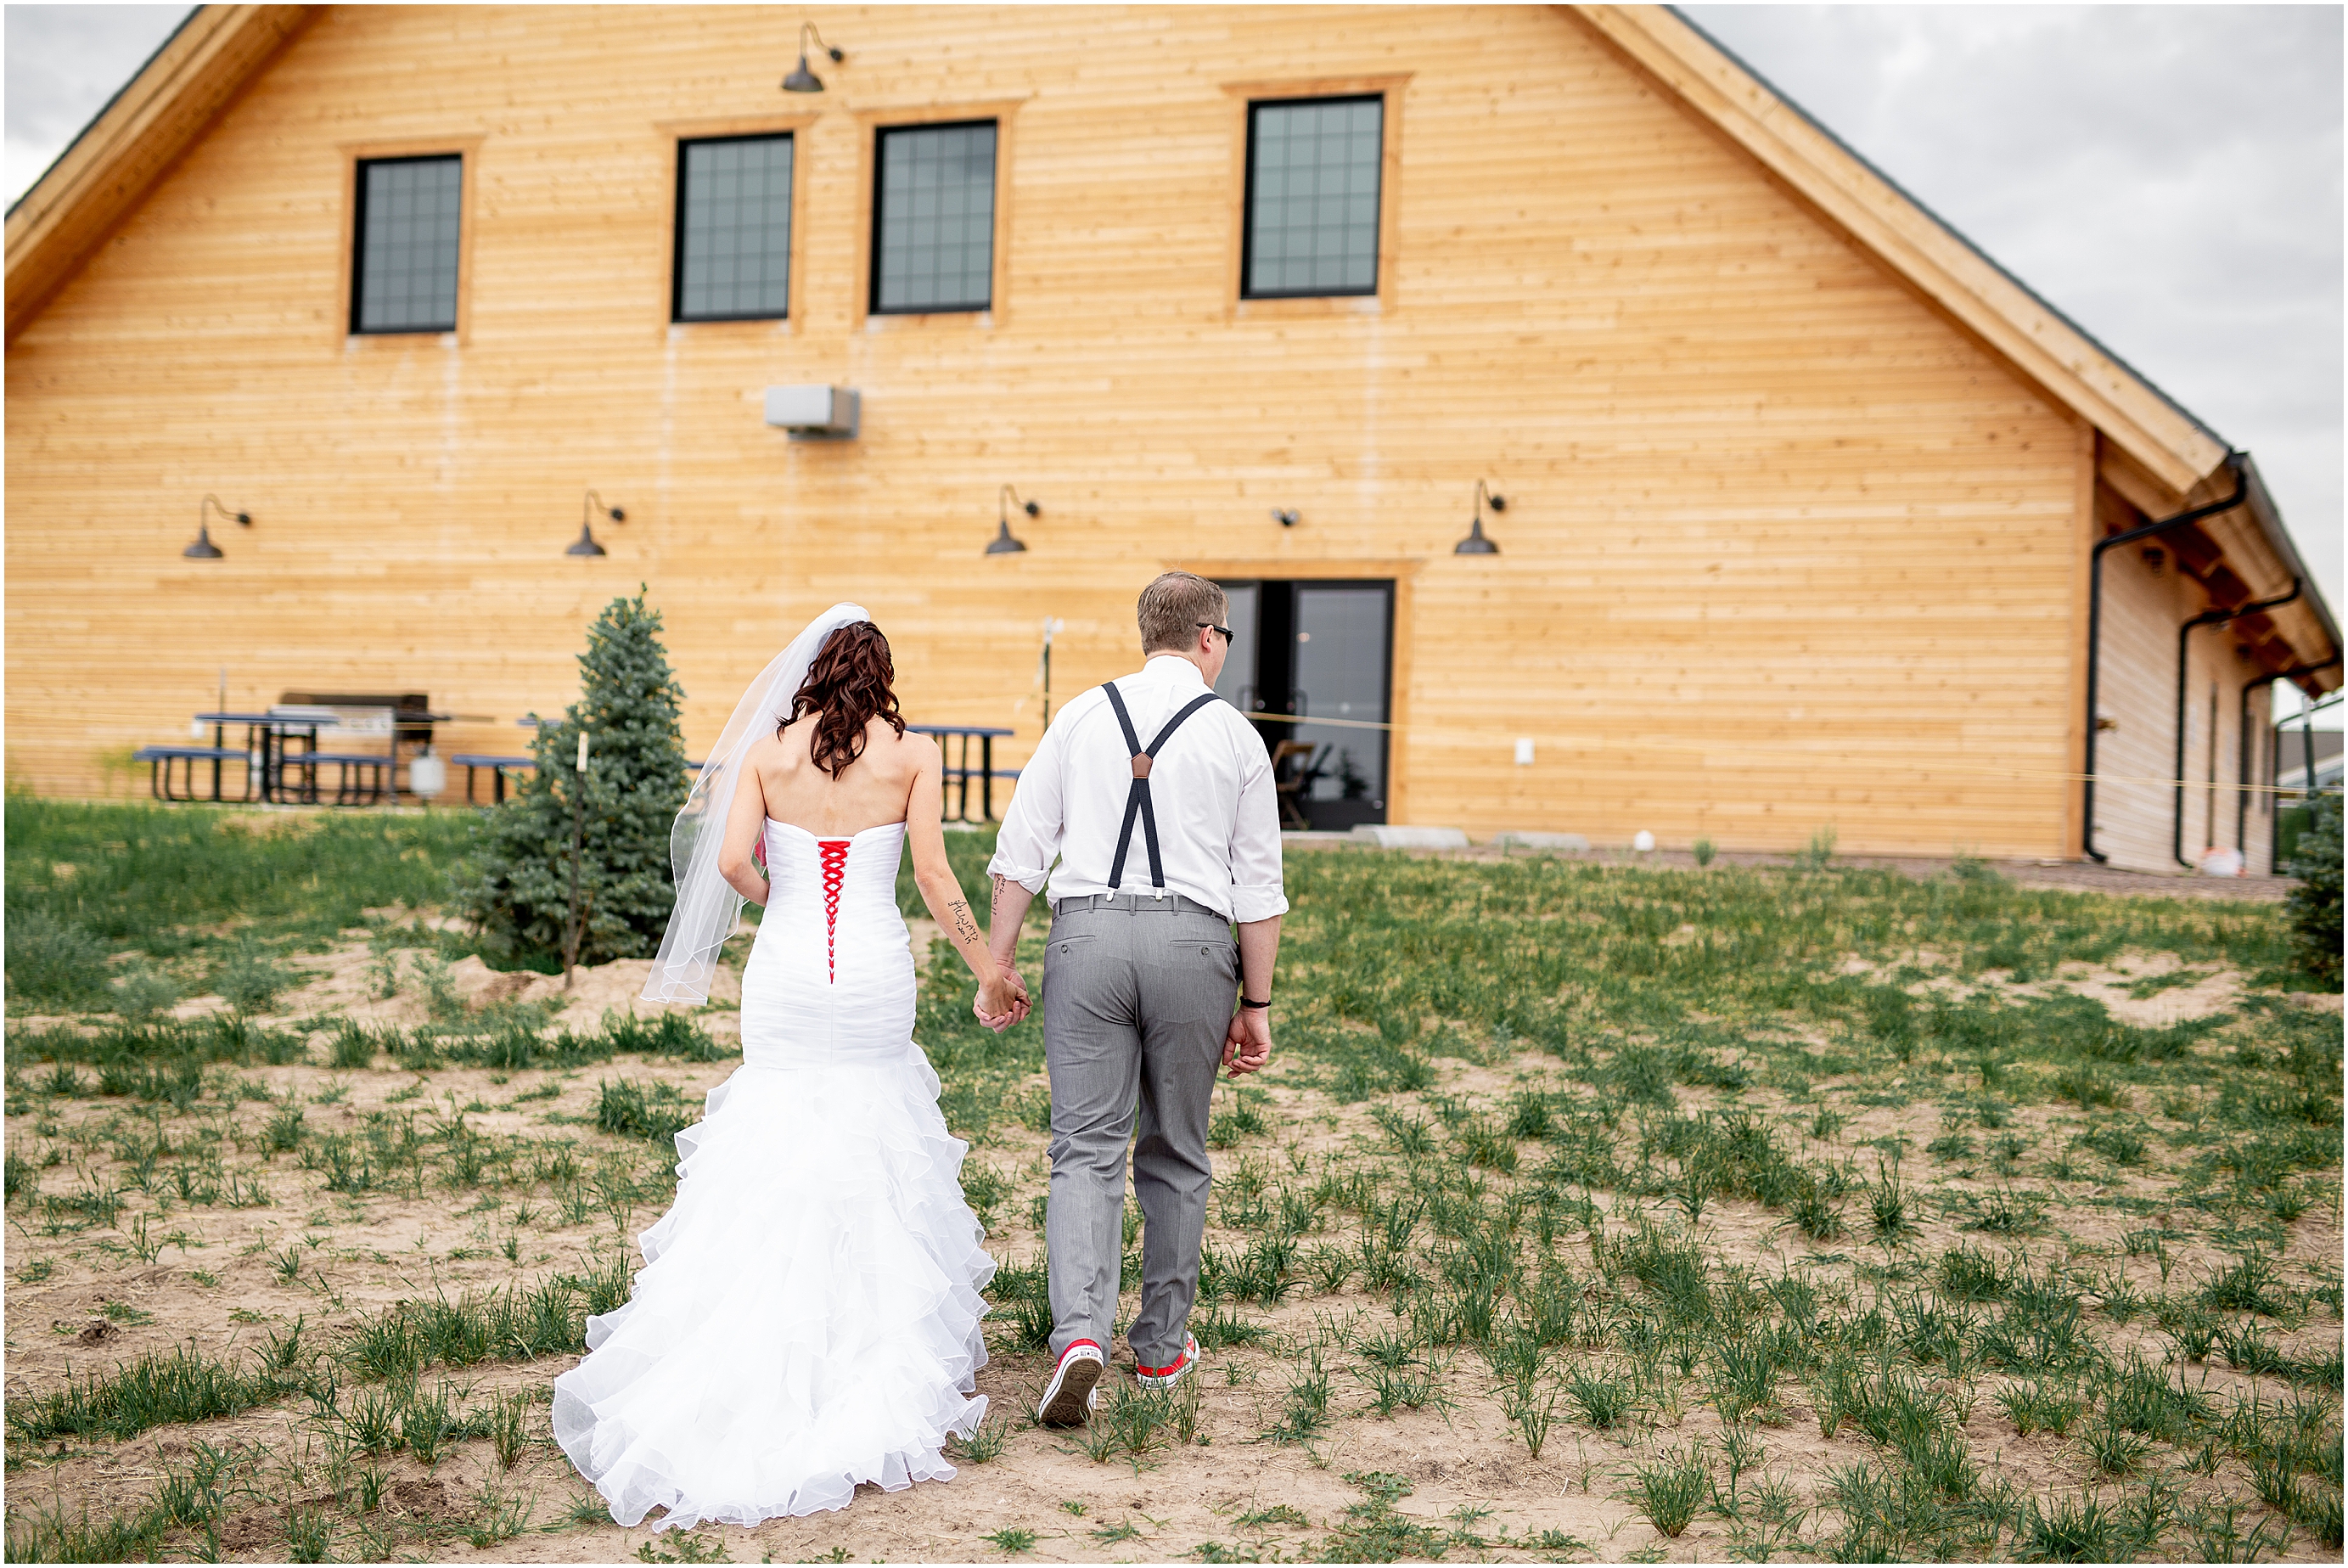 Cheyenne Hills Church Baseball Themed Wedding in The Barn